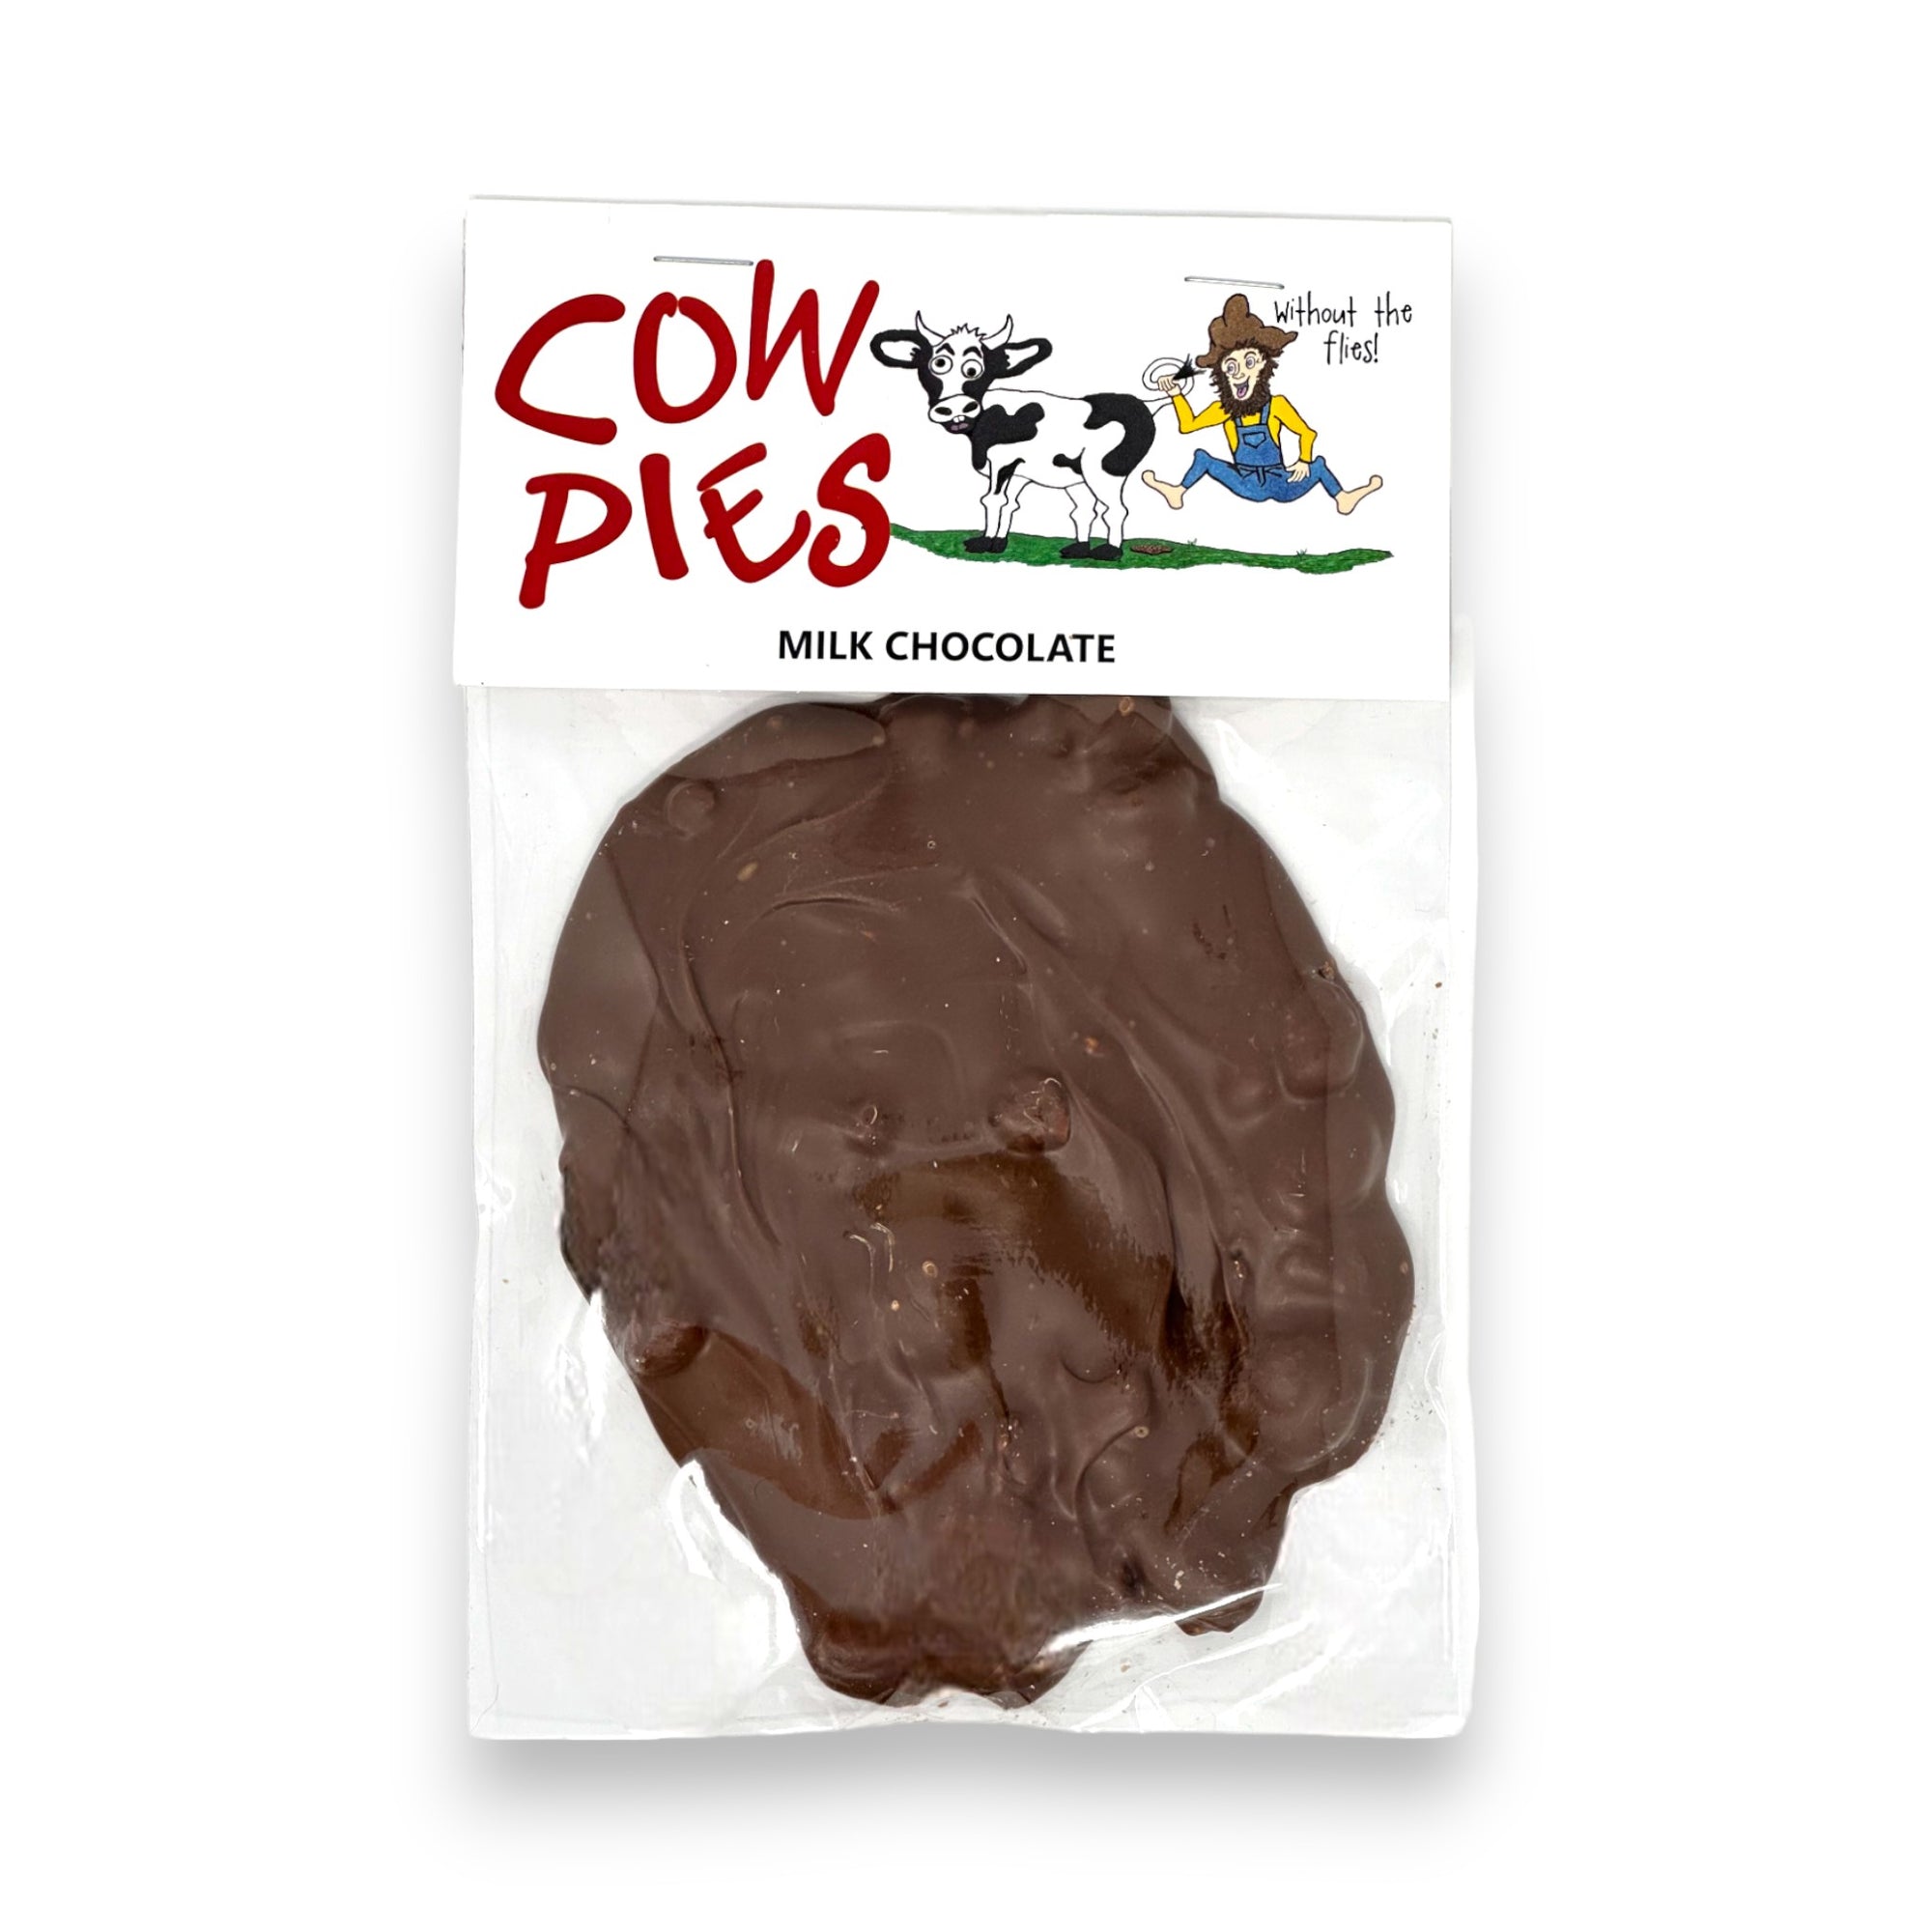 The Roadside Chocolate Cow Pie.